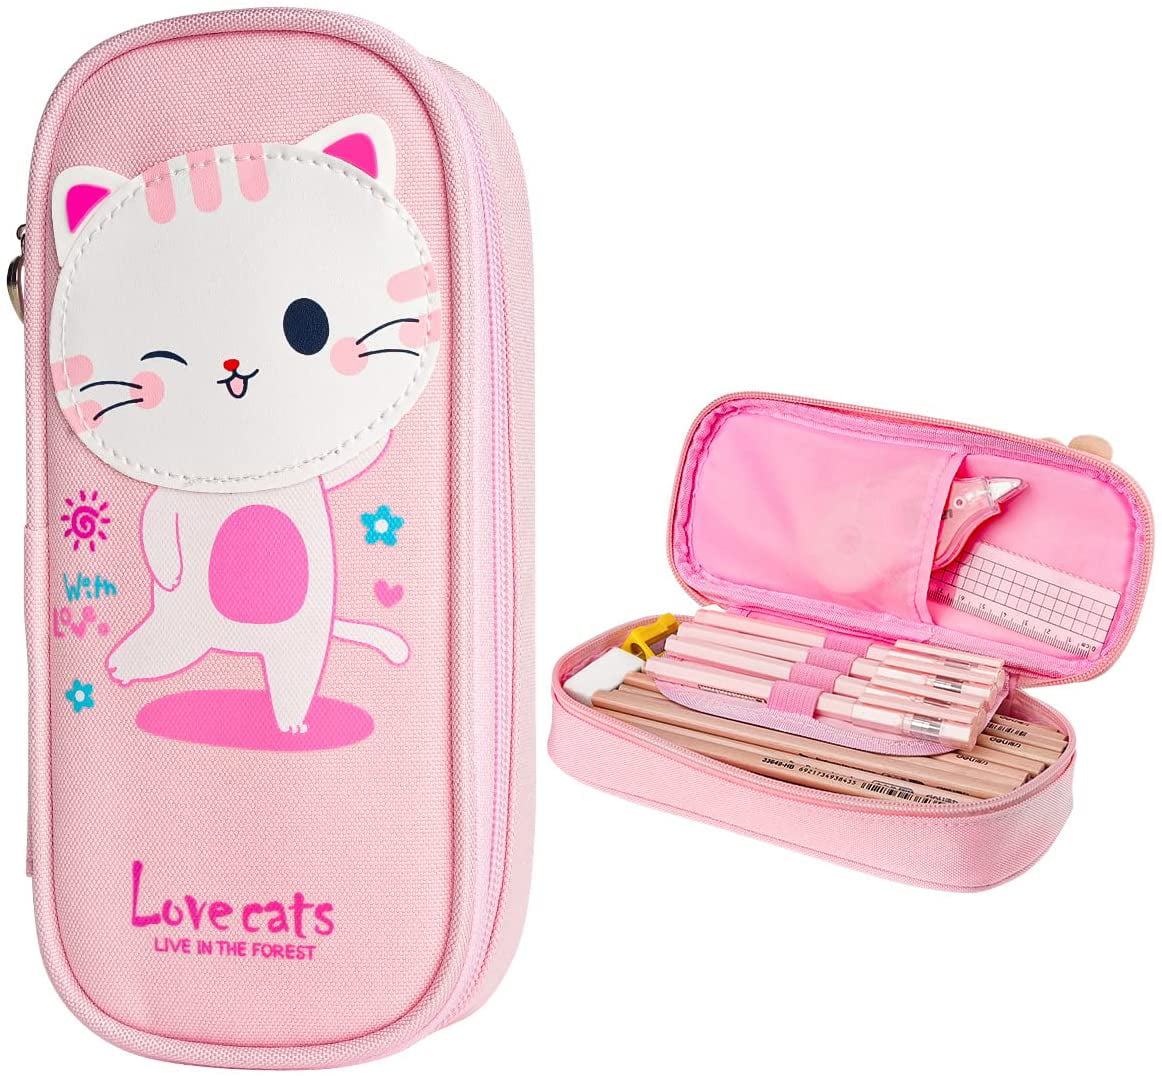 Cute Kawaii Cat PVC Zippers Pen Bag Pencil Case storages bags For Girls Kids#% 